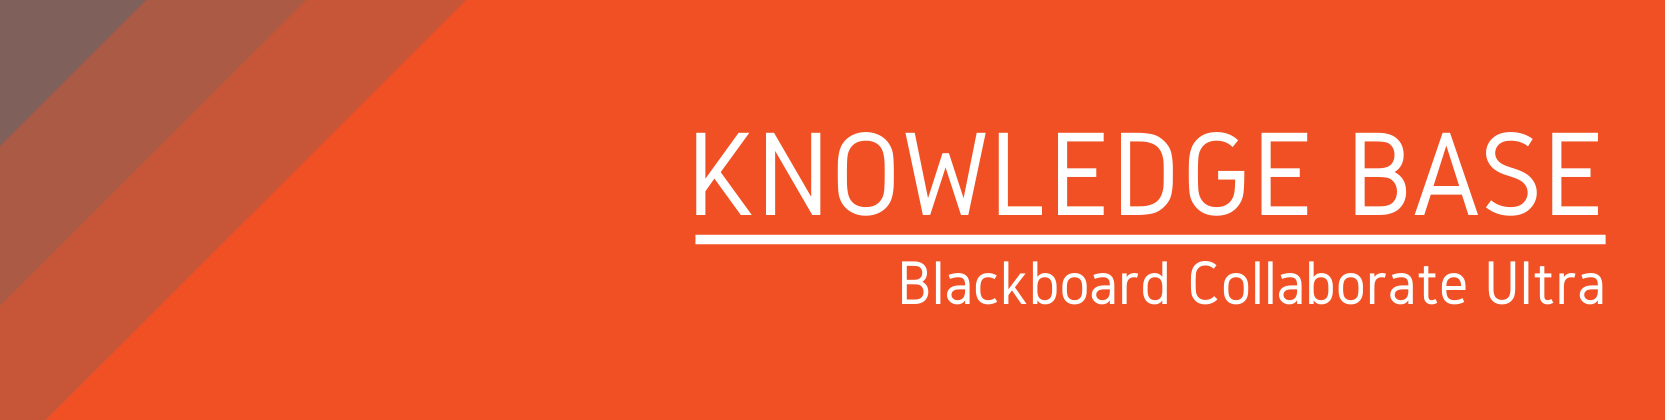 Knowledge Base: Blackboard Collaborate Ultra